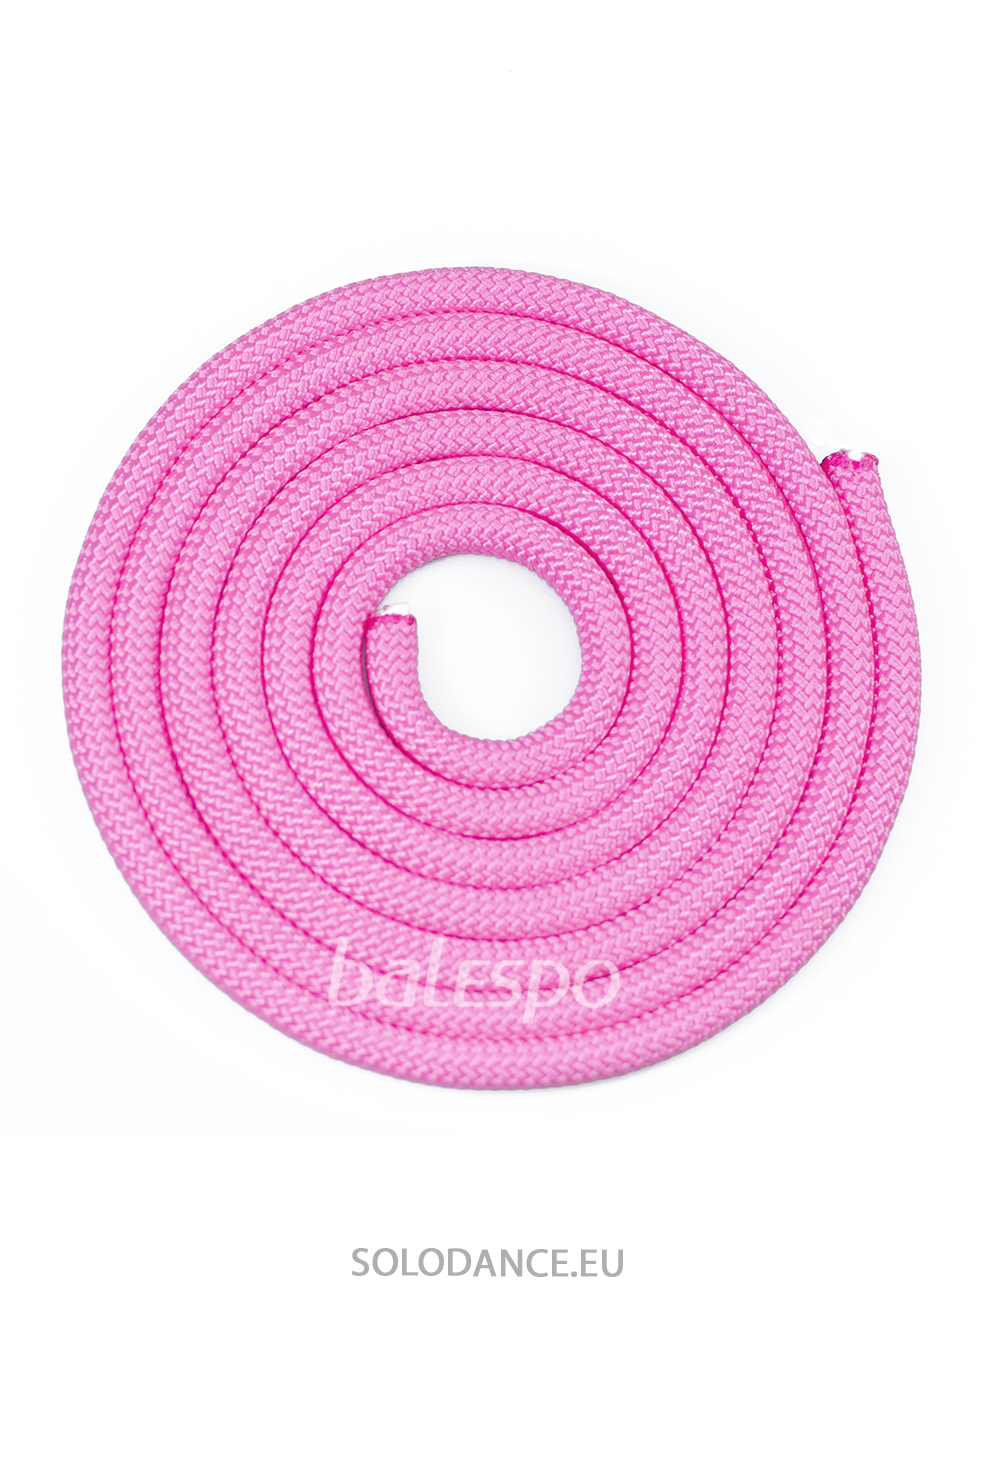 Gymnastic rope BALESPO neon pink 3 m